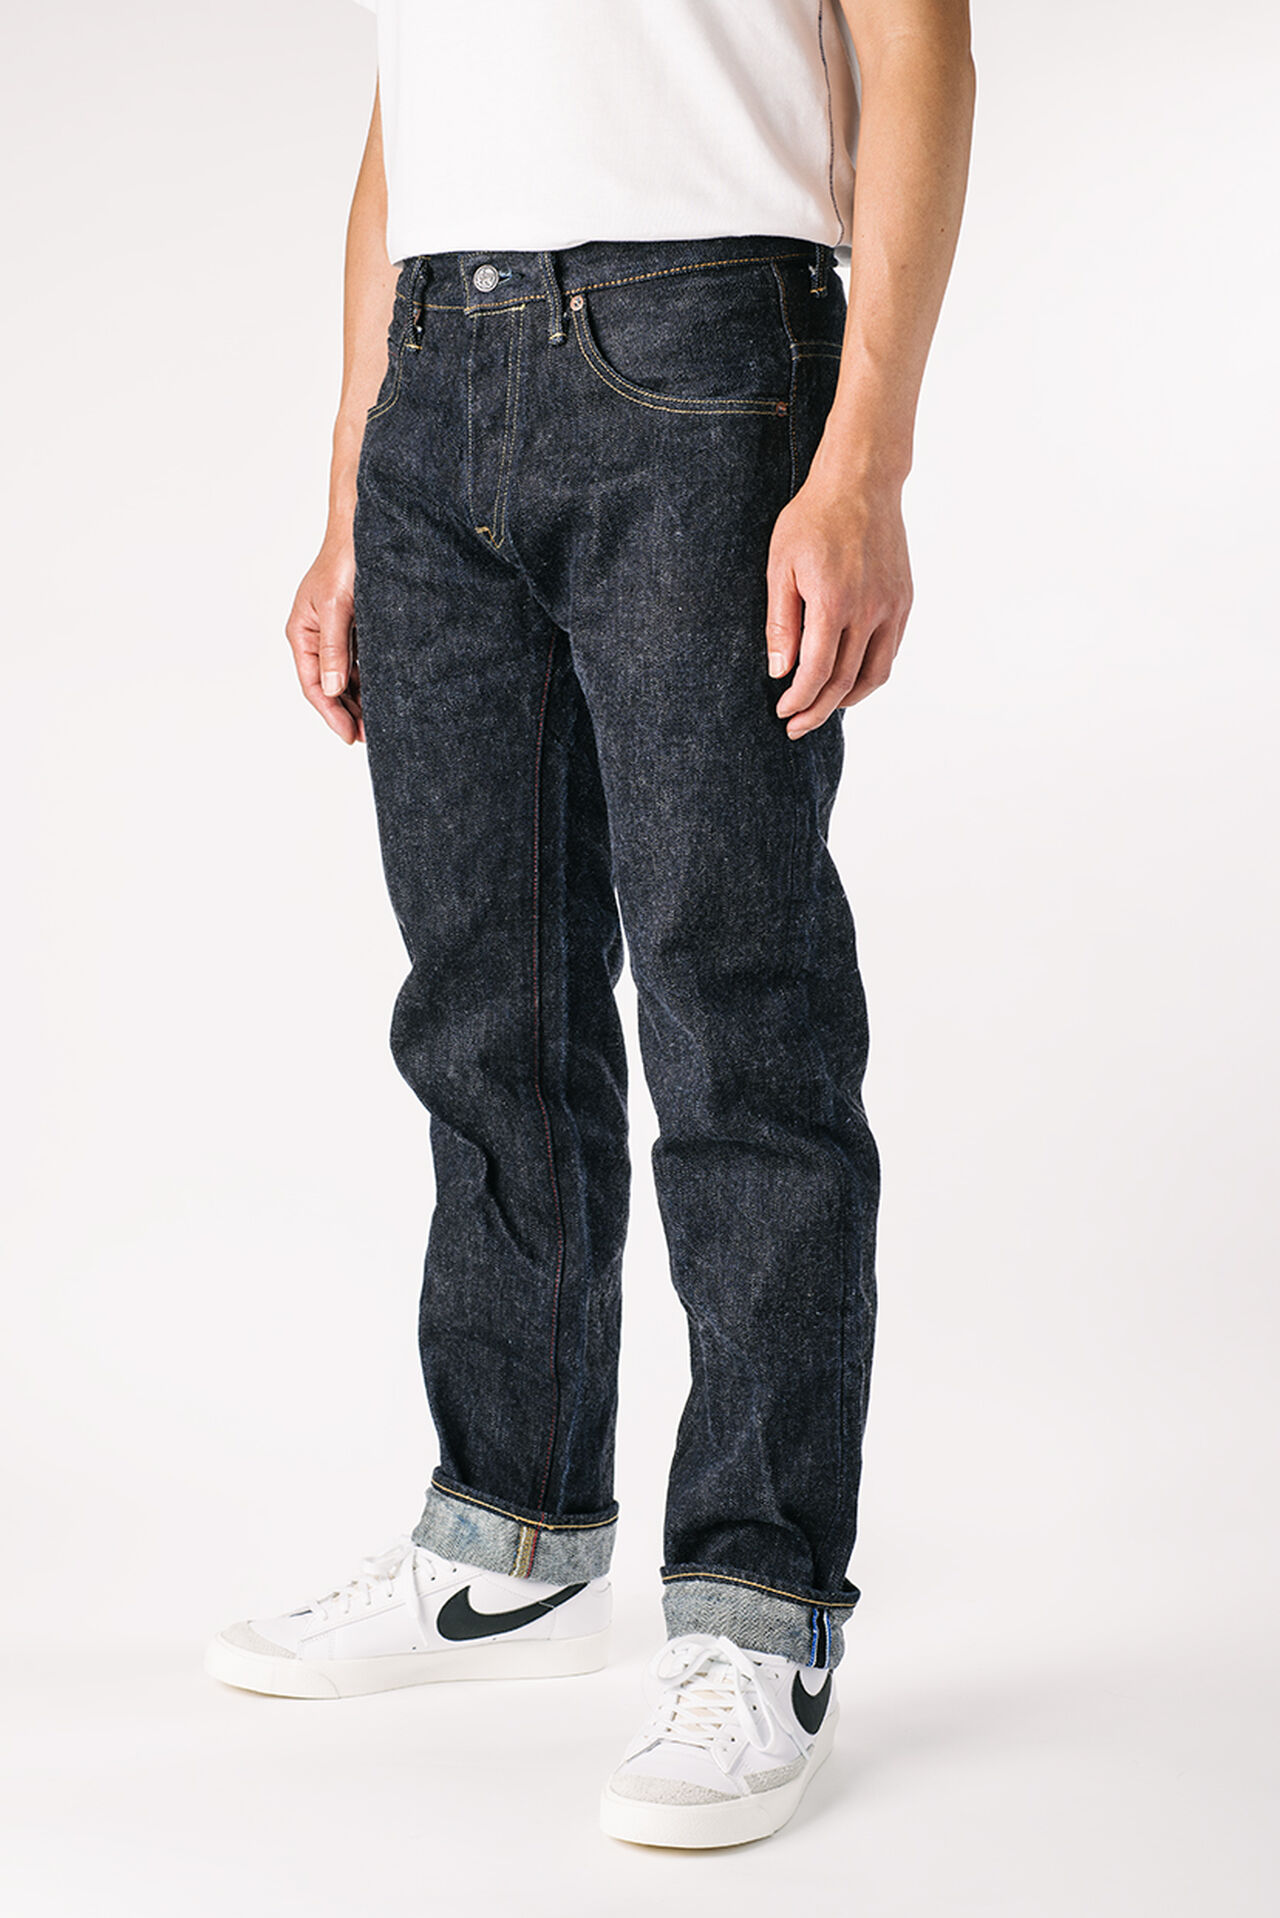 RCSST 16.5oz Redcast Slim Straight Jeans,, large image number 1